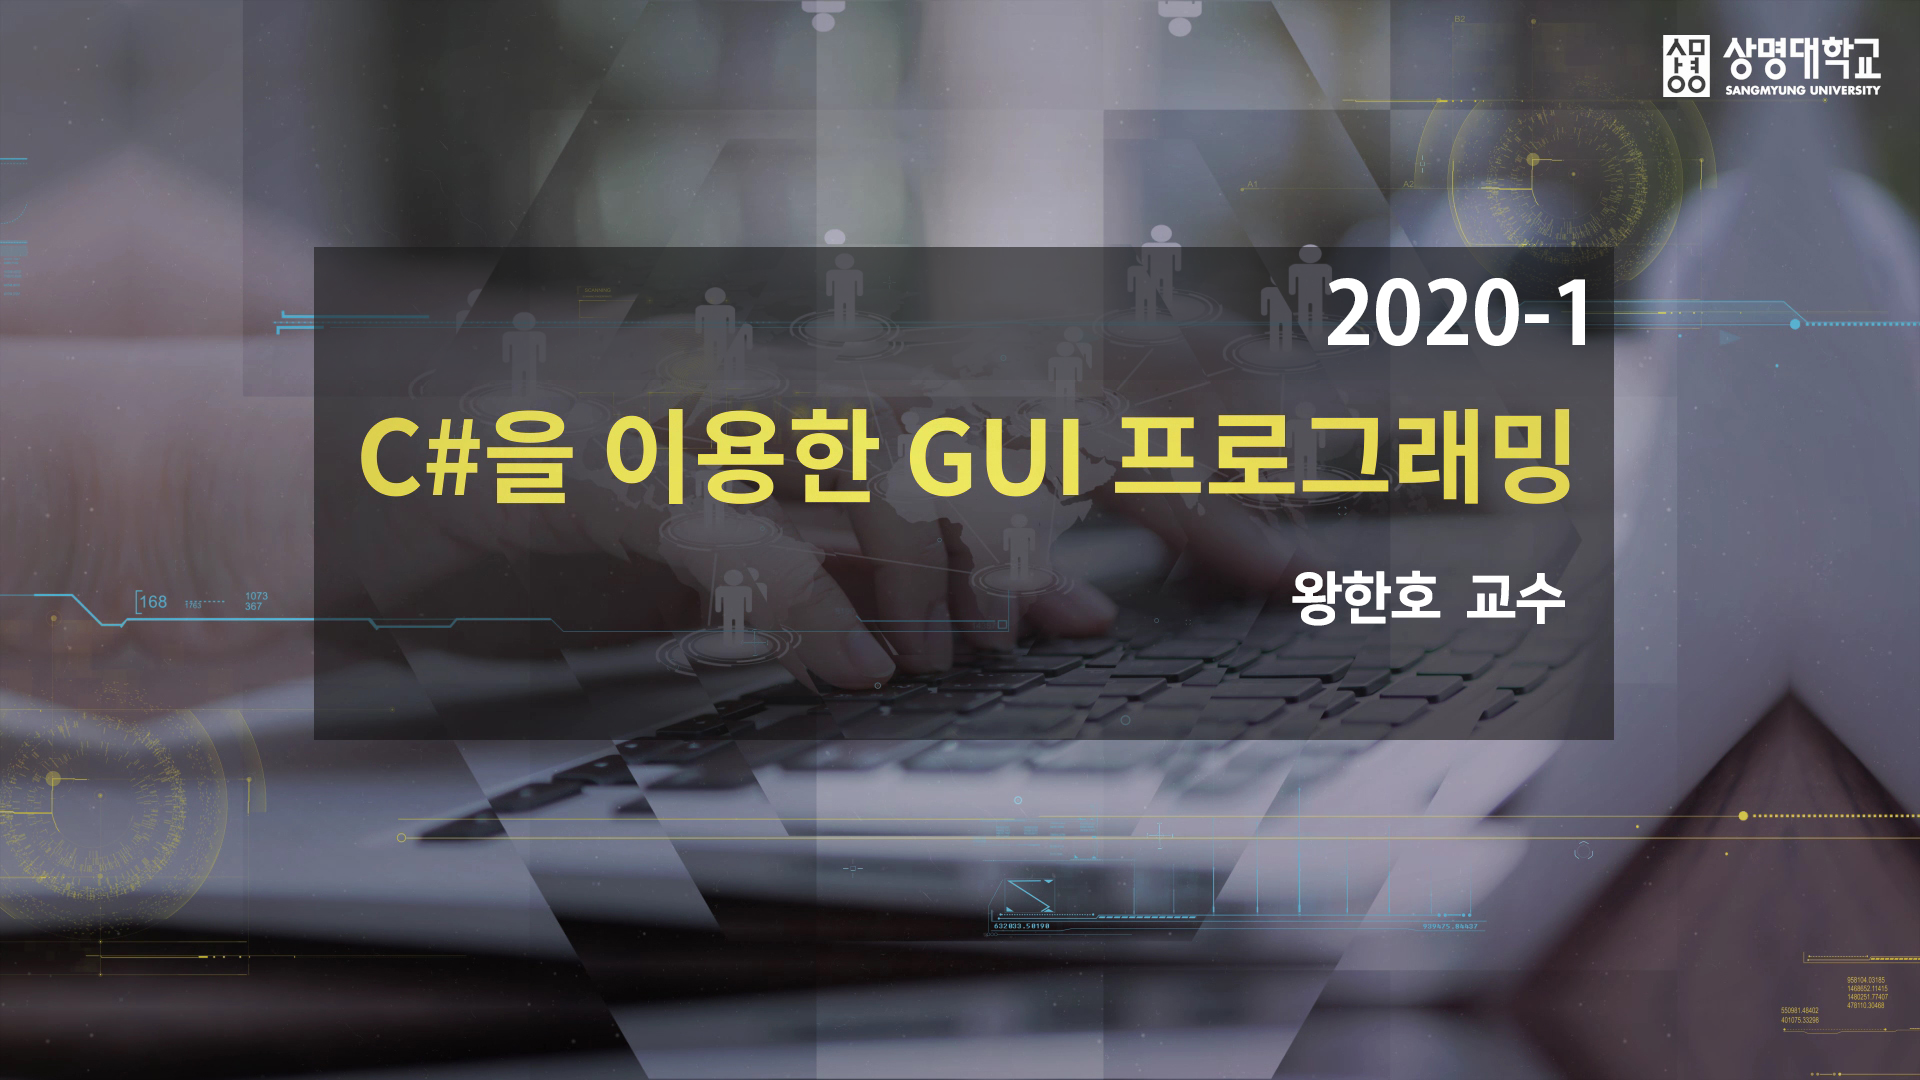 C#을 이용한 GUI프로그래밍 개강일 2020-04-06 종강일 2020-07-19 강좌상태 종료